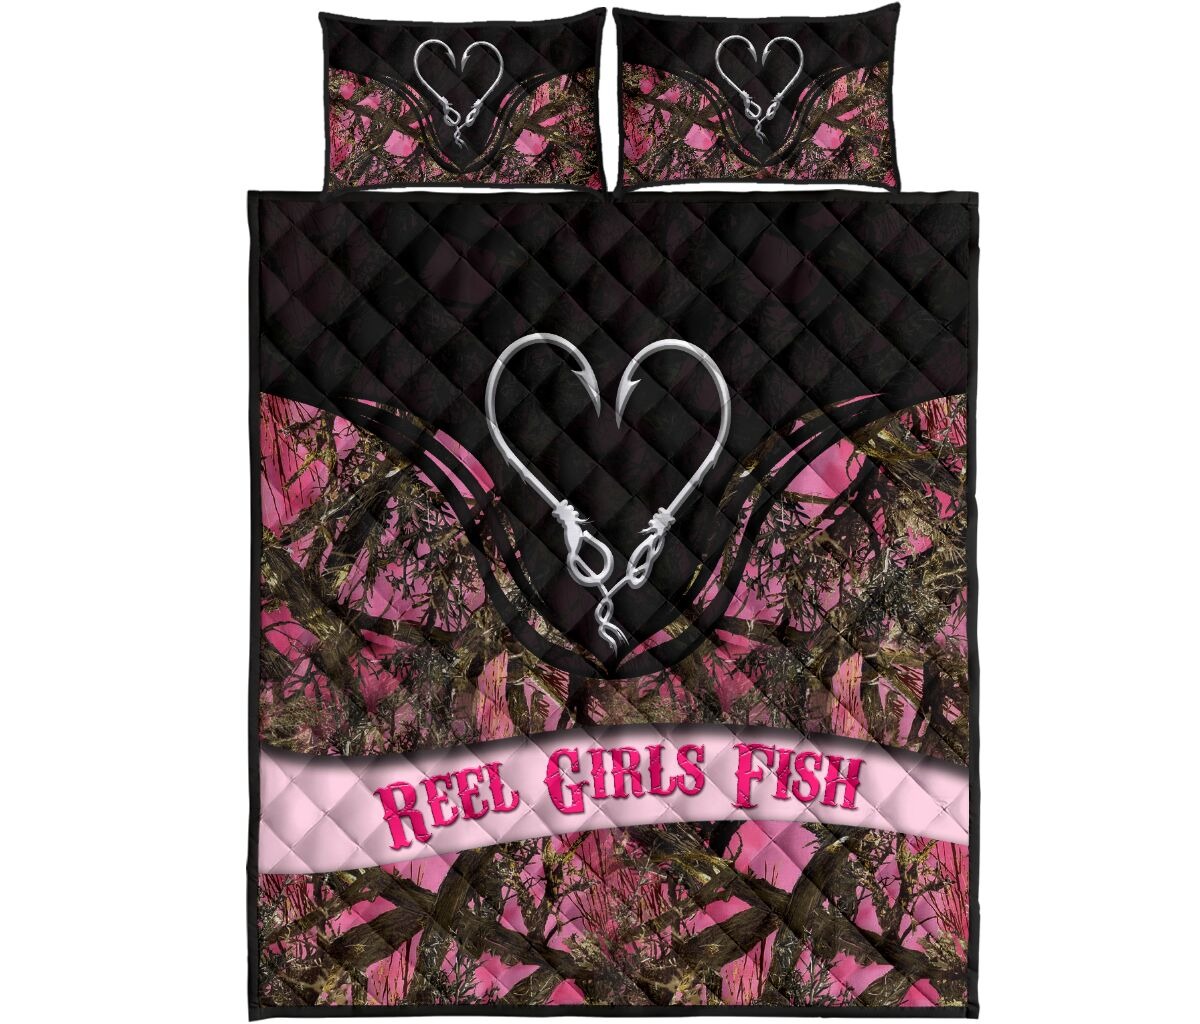 Reel girl fish quilt bedding set4